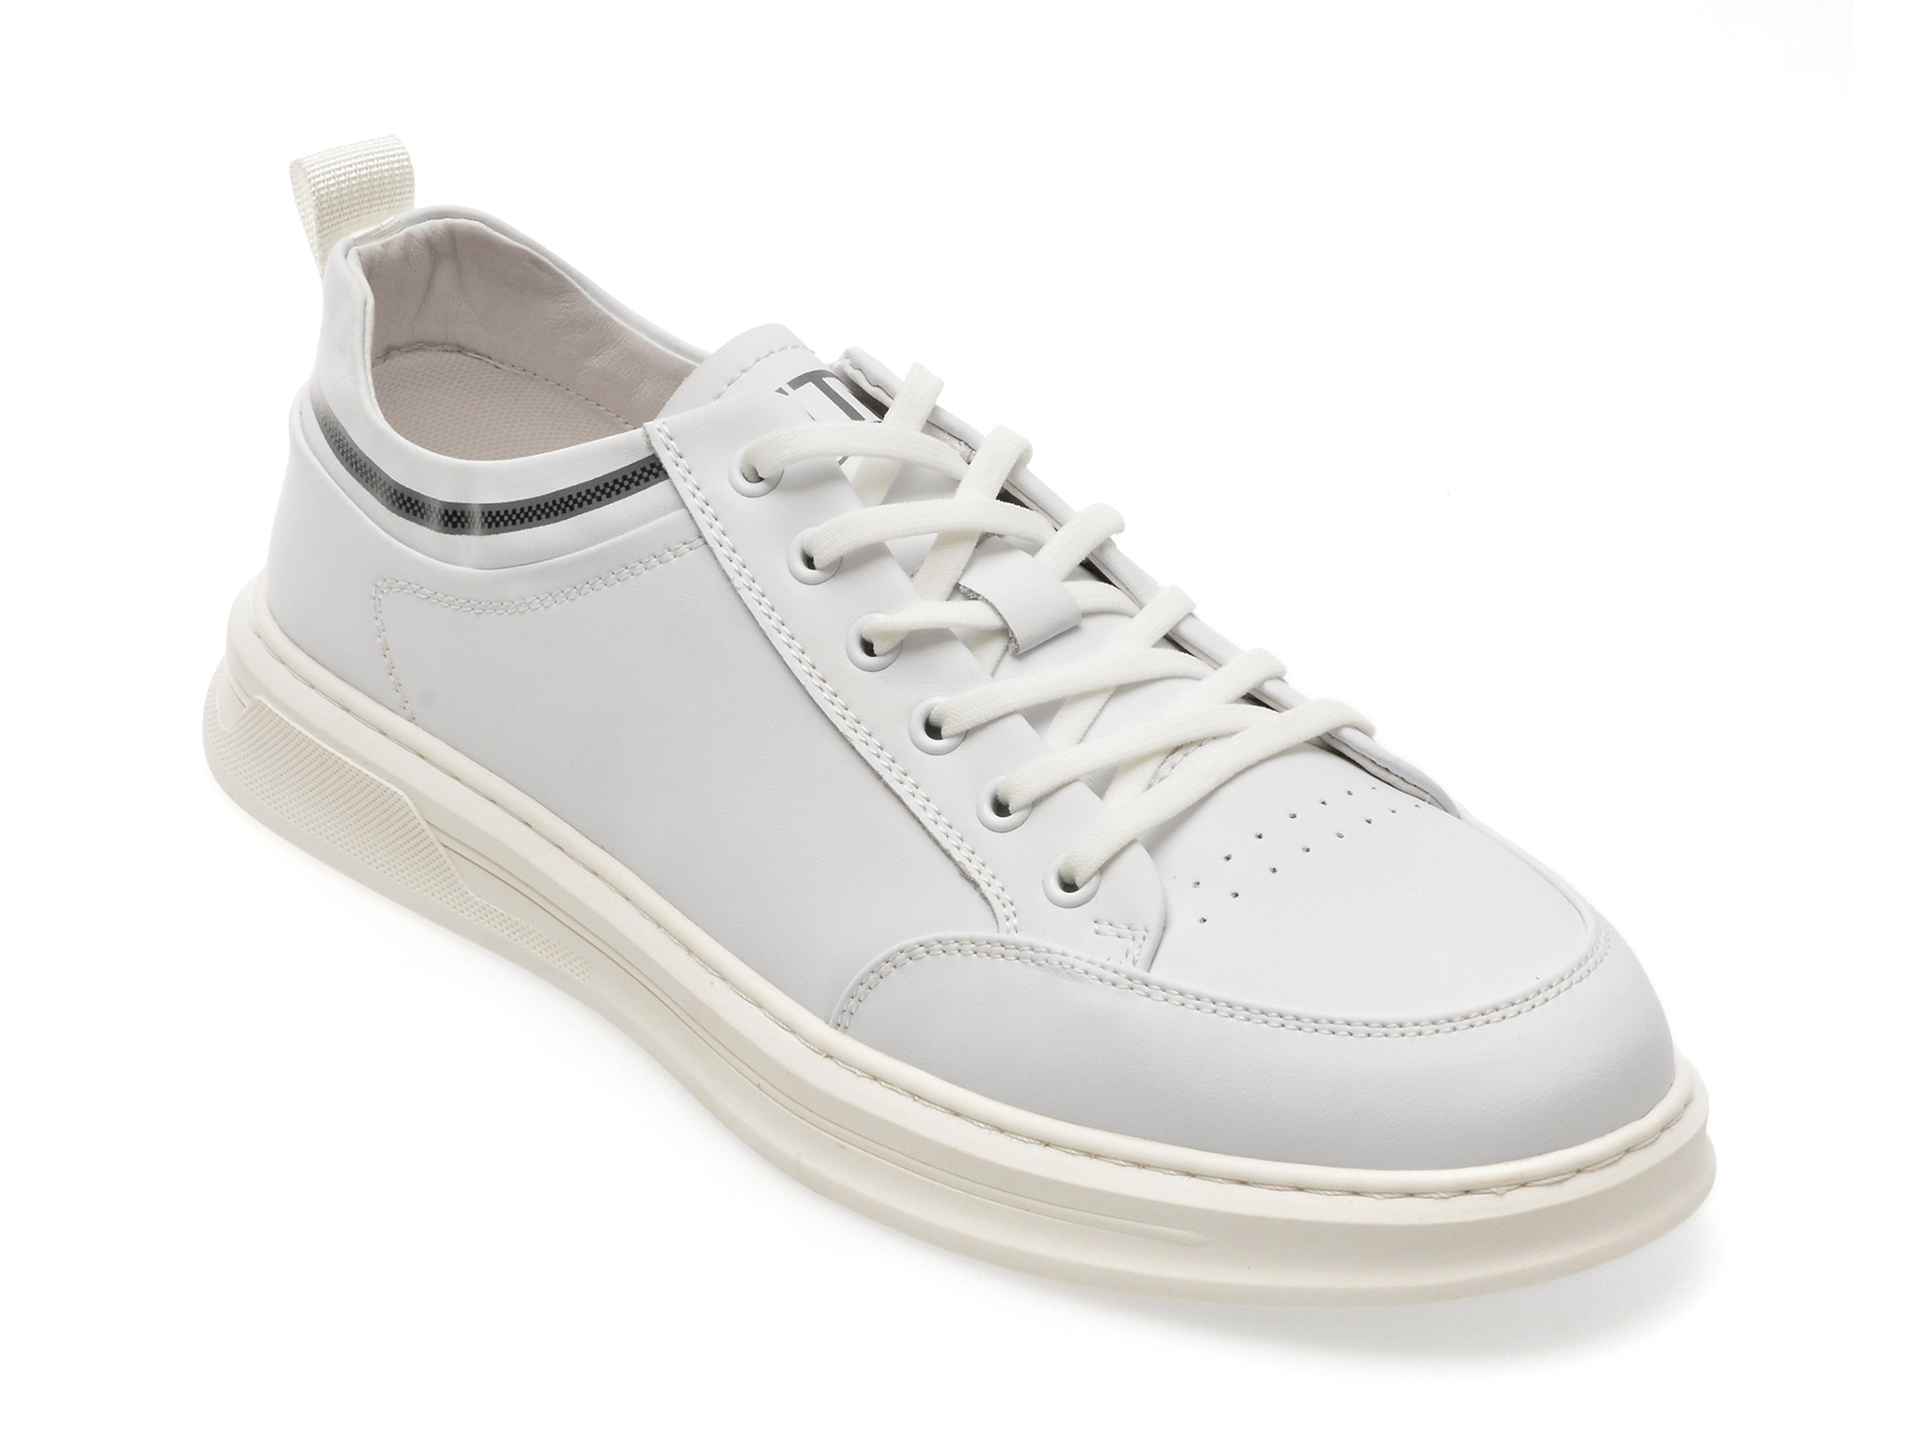 Pantofi casual BITE THE BULLET albi, 913018, din piele naturala